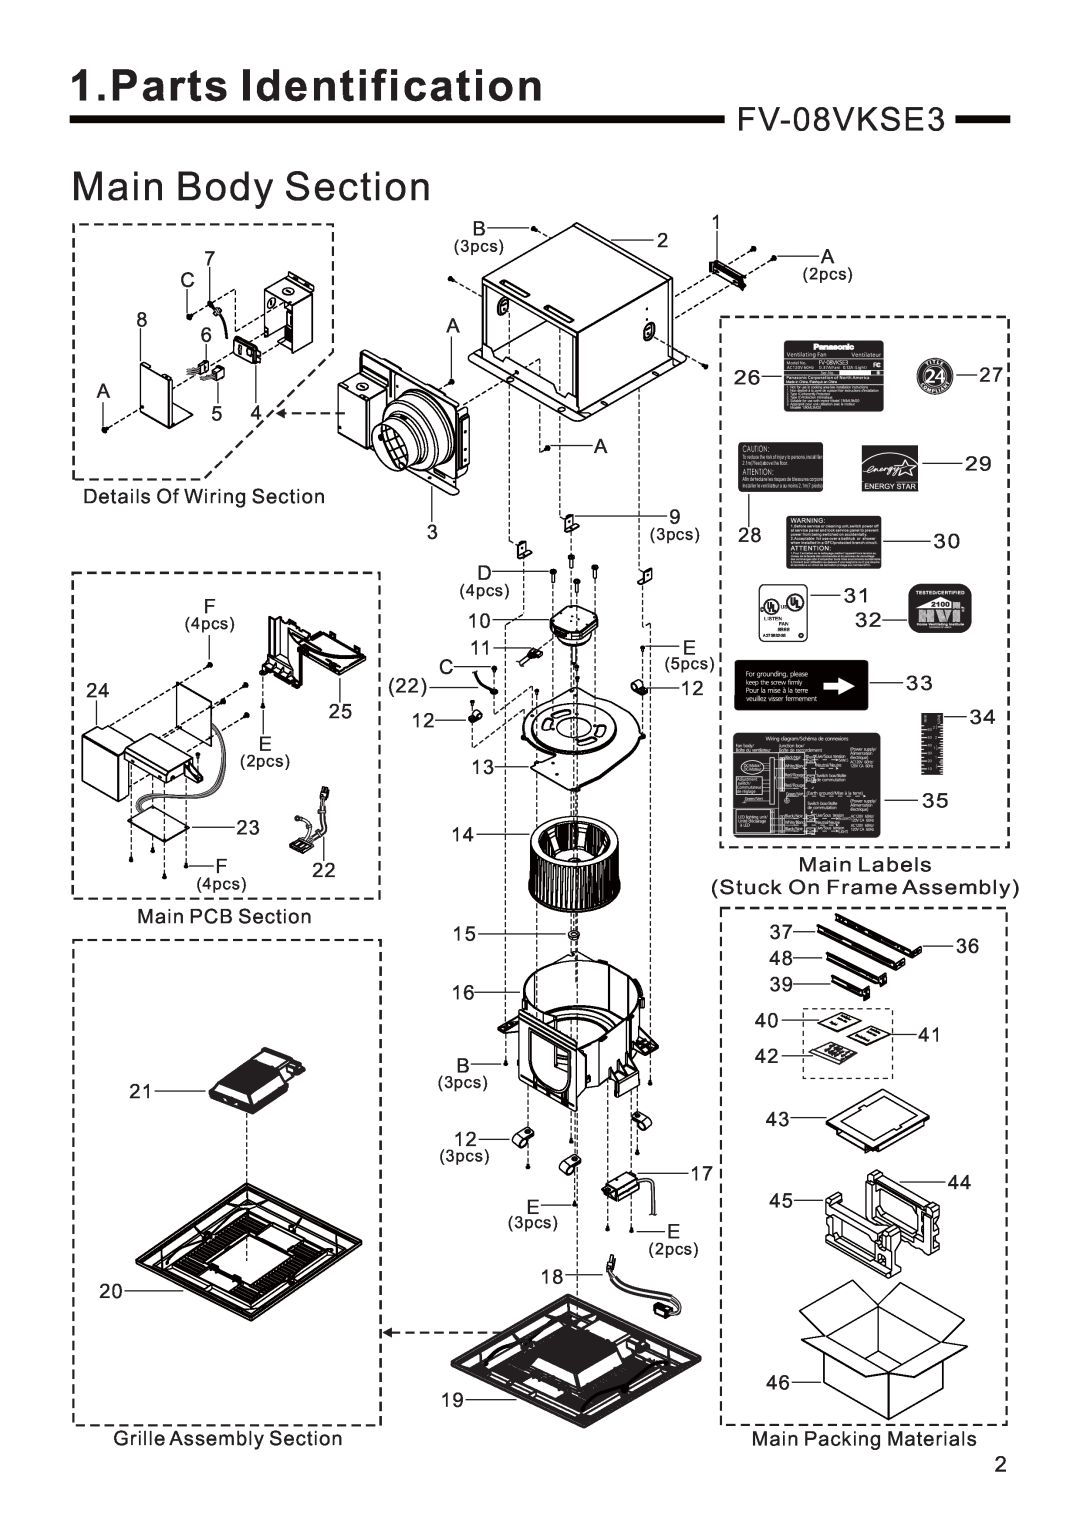 Panasonic FV-08VKME3 service manual FV-08VKSE3, Parts Identification, Main Body Section 